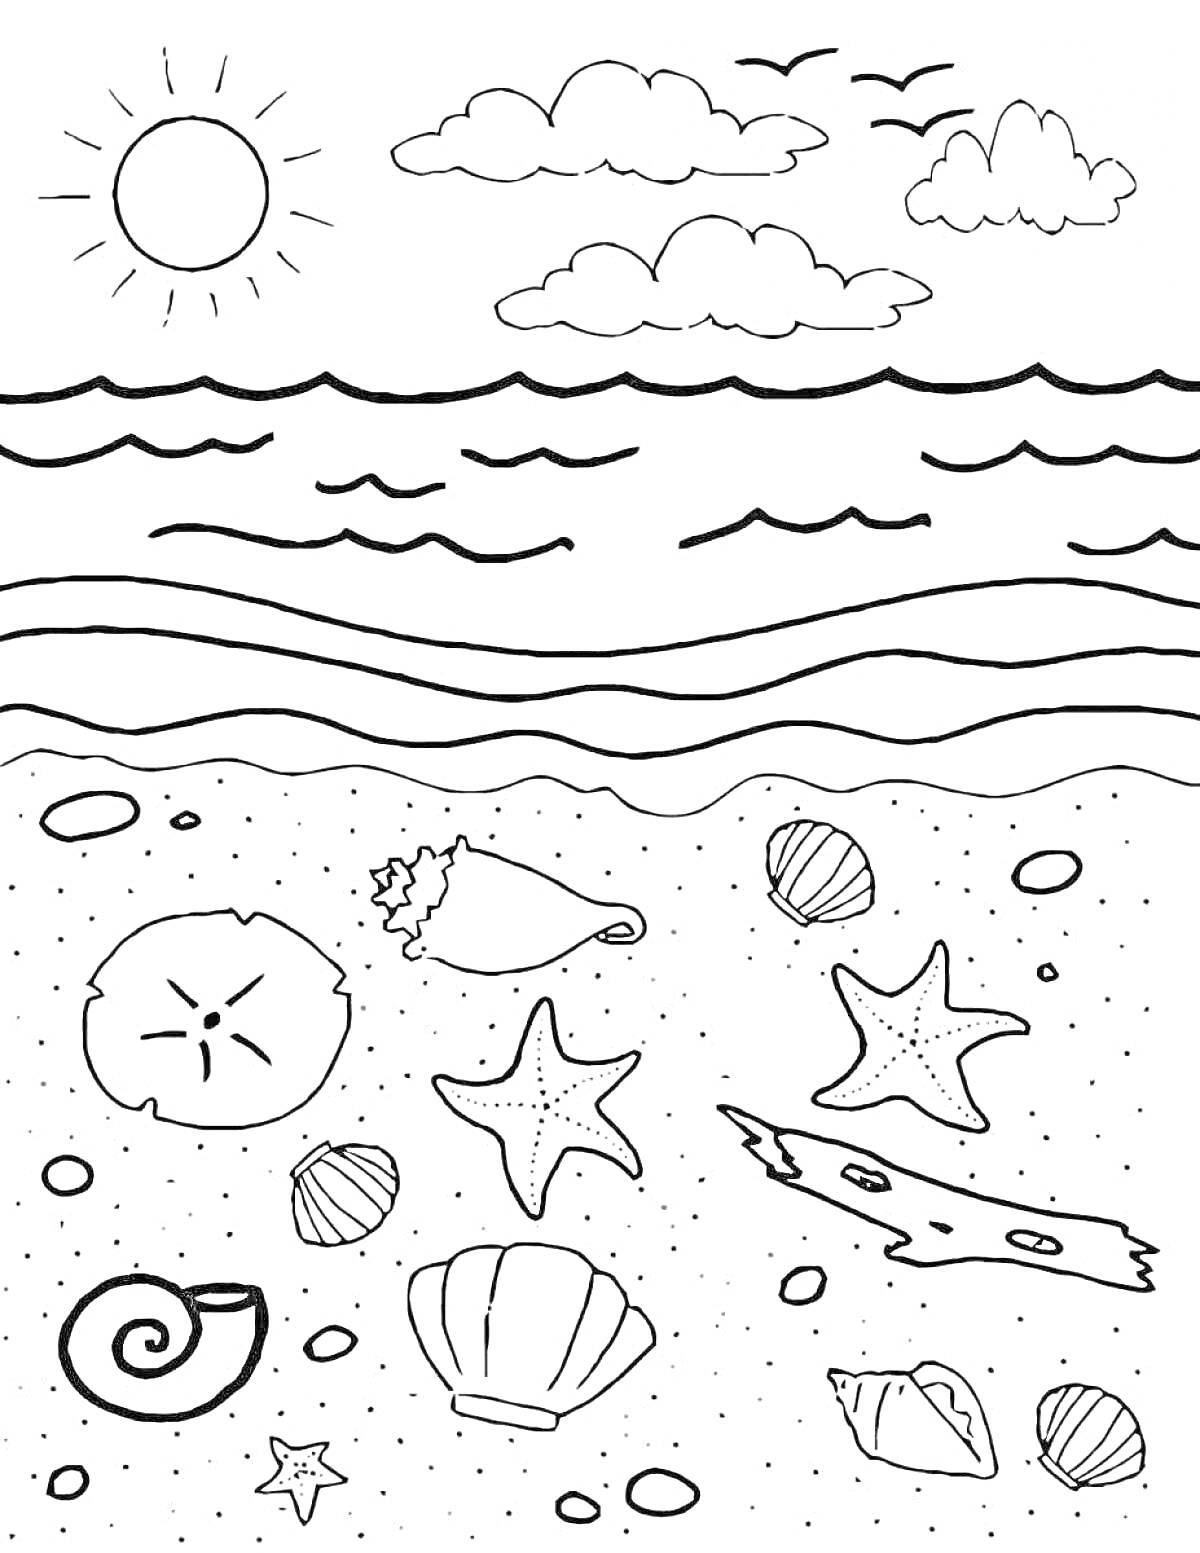 На раскраске изображено: Море, Солнце, Облака, Волны, Морские звезды, Песок